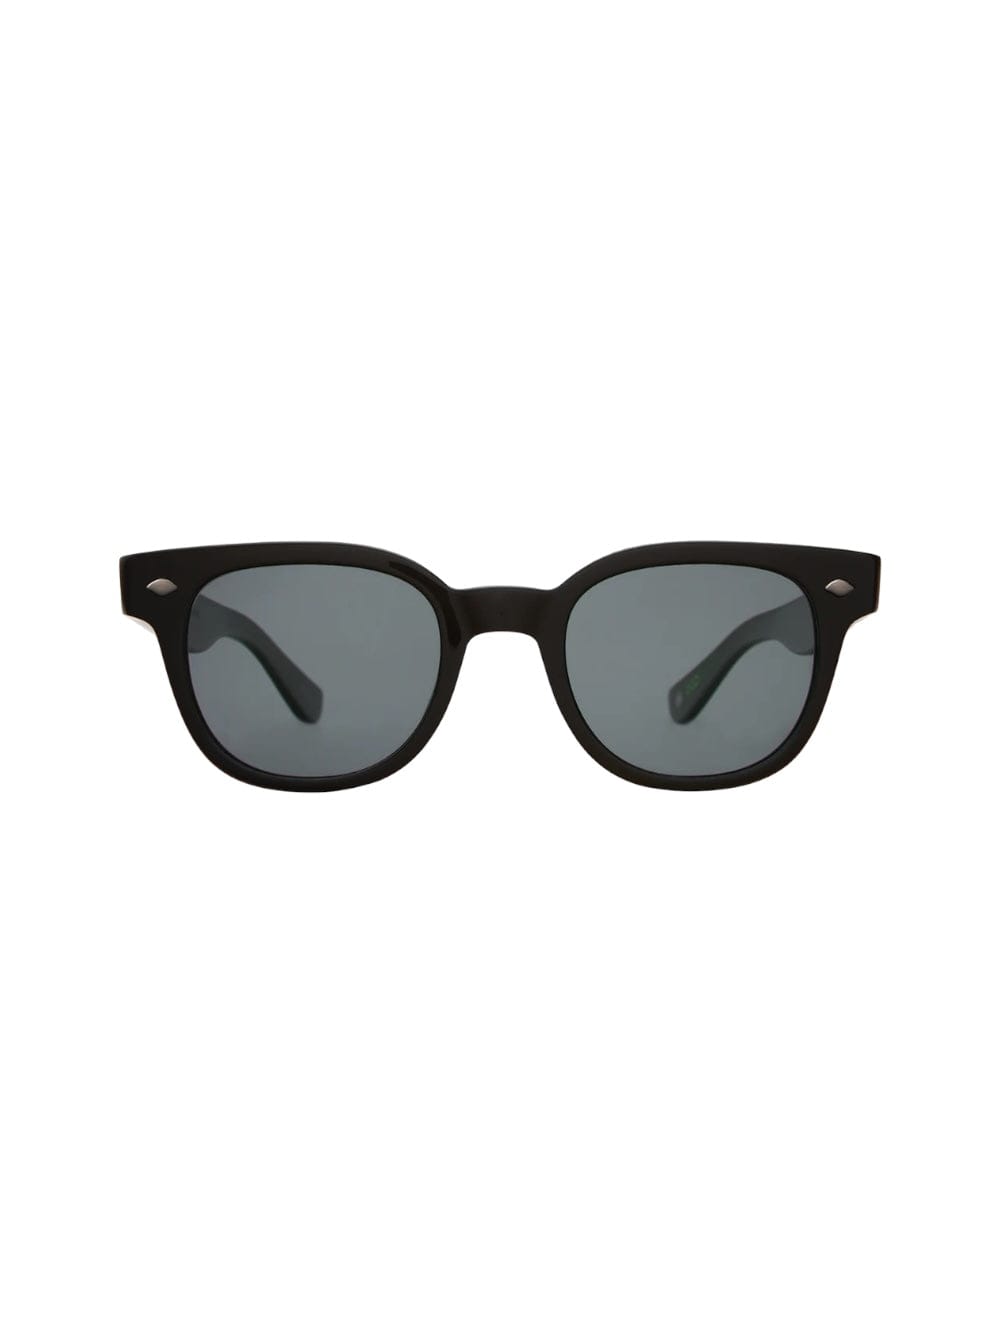 Canter - Black Sunglasses